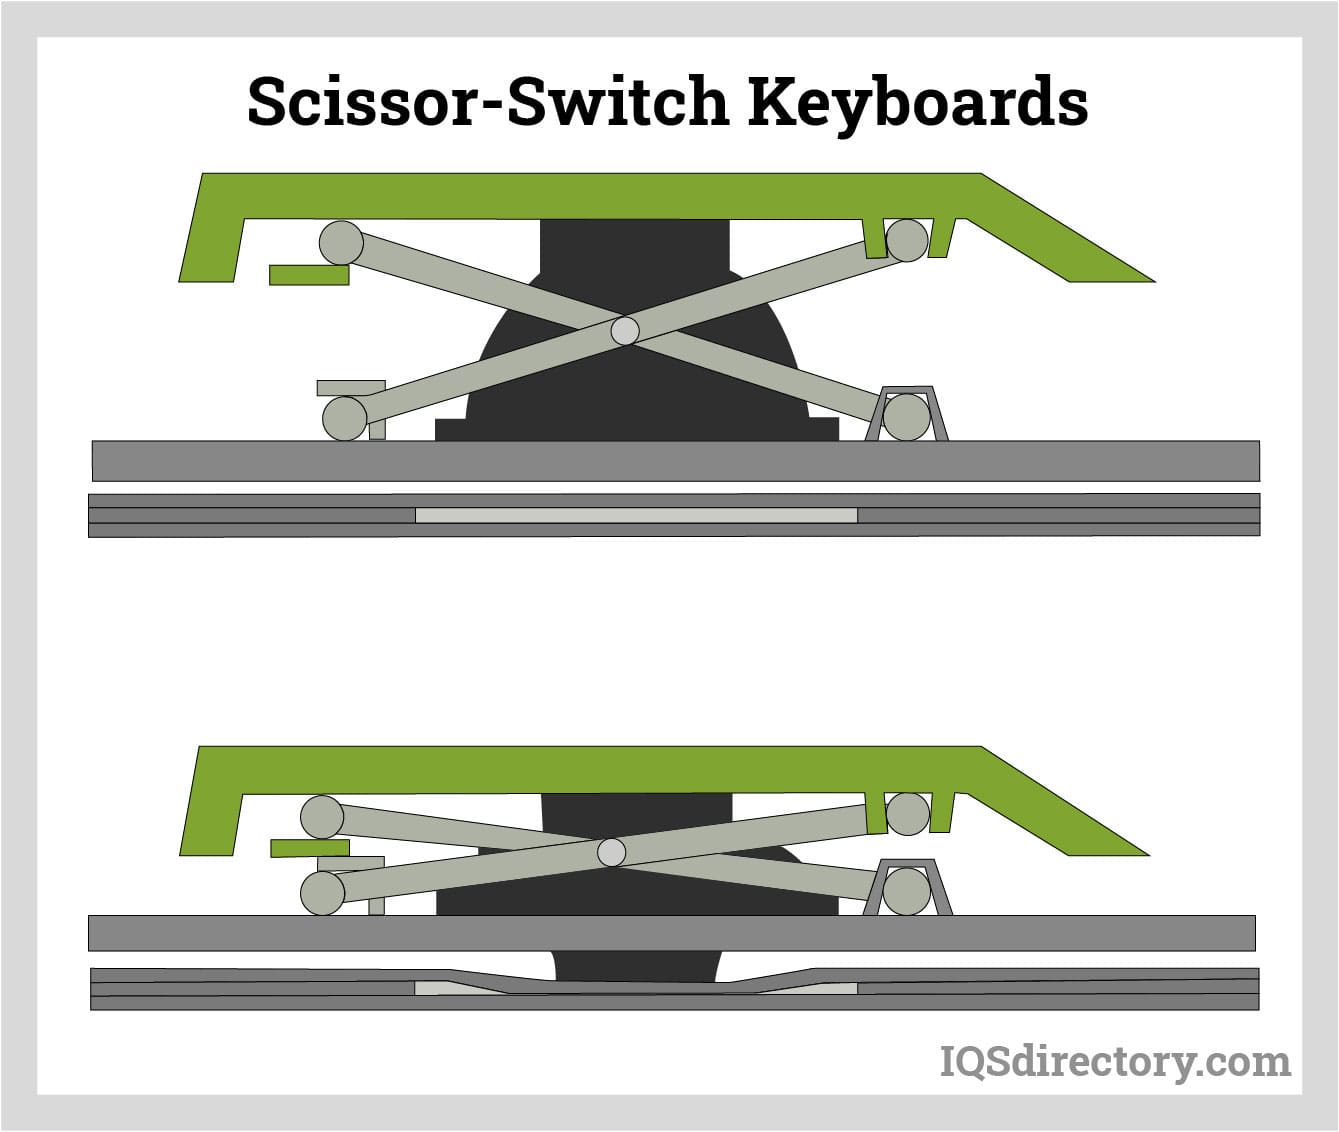 Scissor-Switch Keyboards